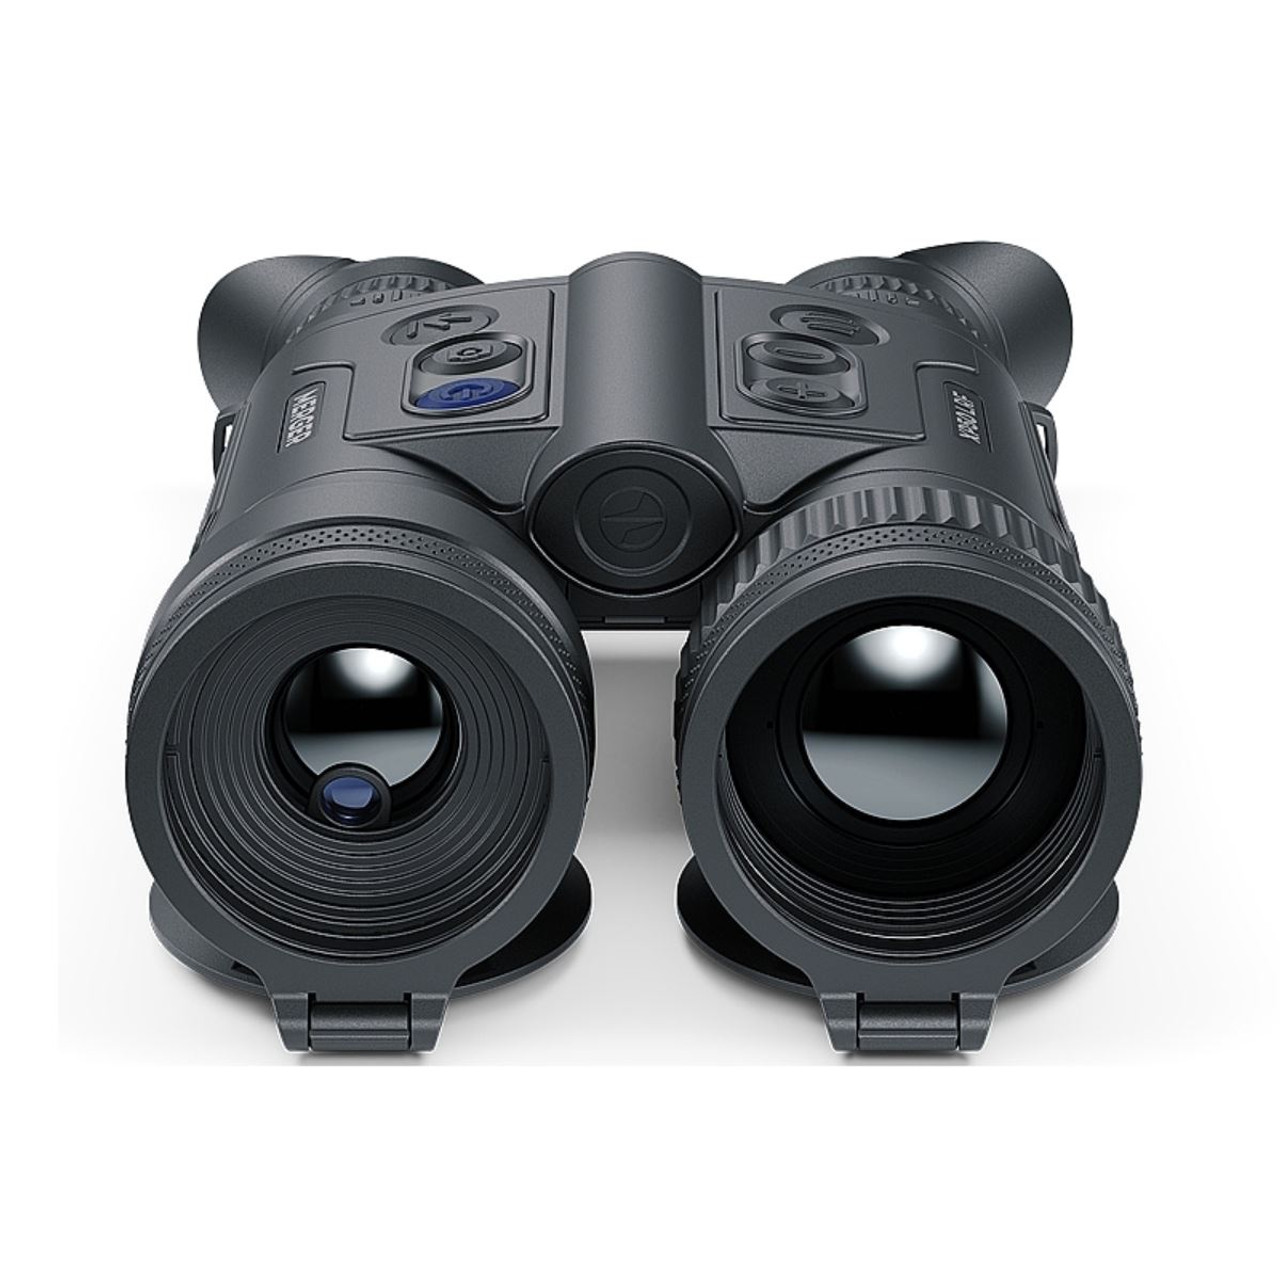 Pulsar Merger LRF XP50 Thermal Imaging Binocular with WiFi and Range Finder